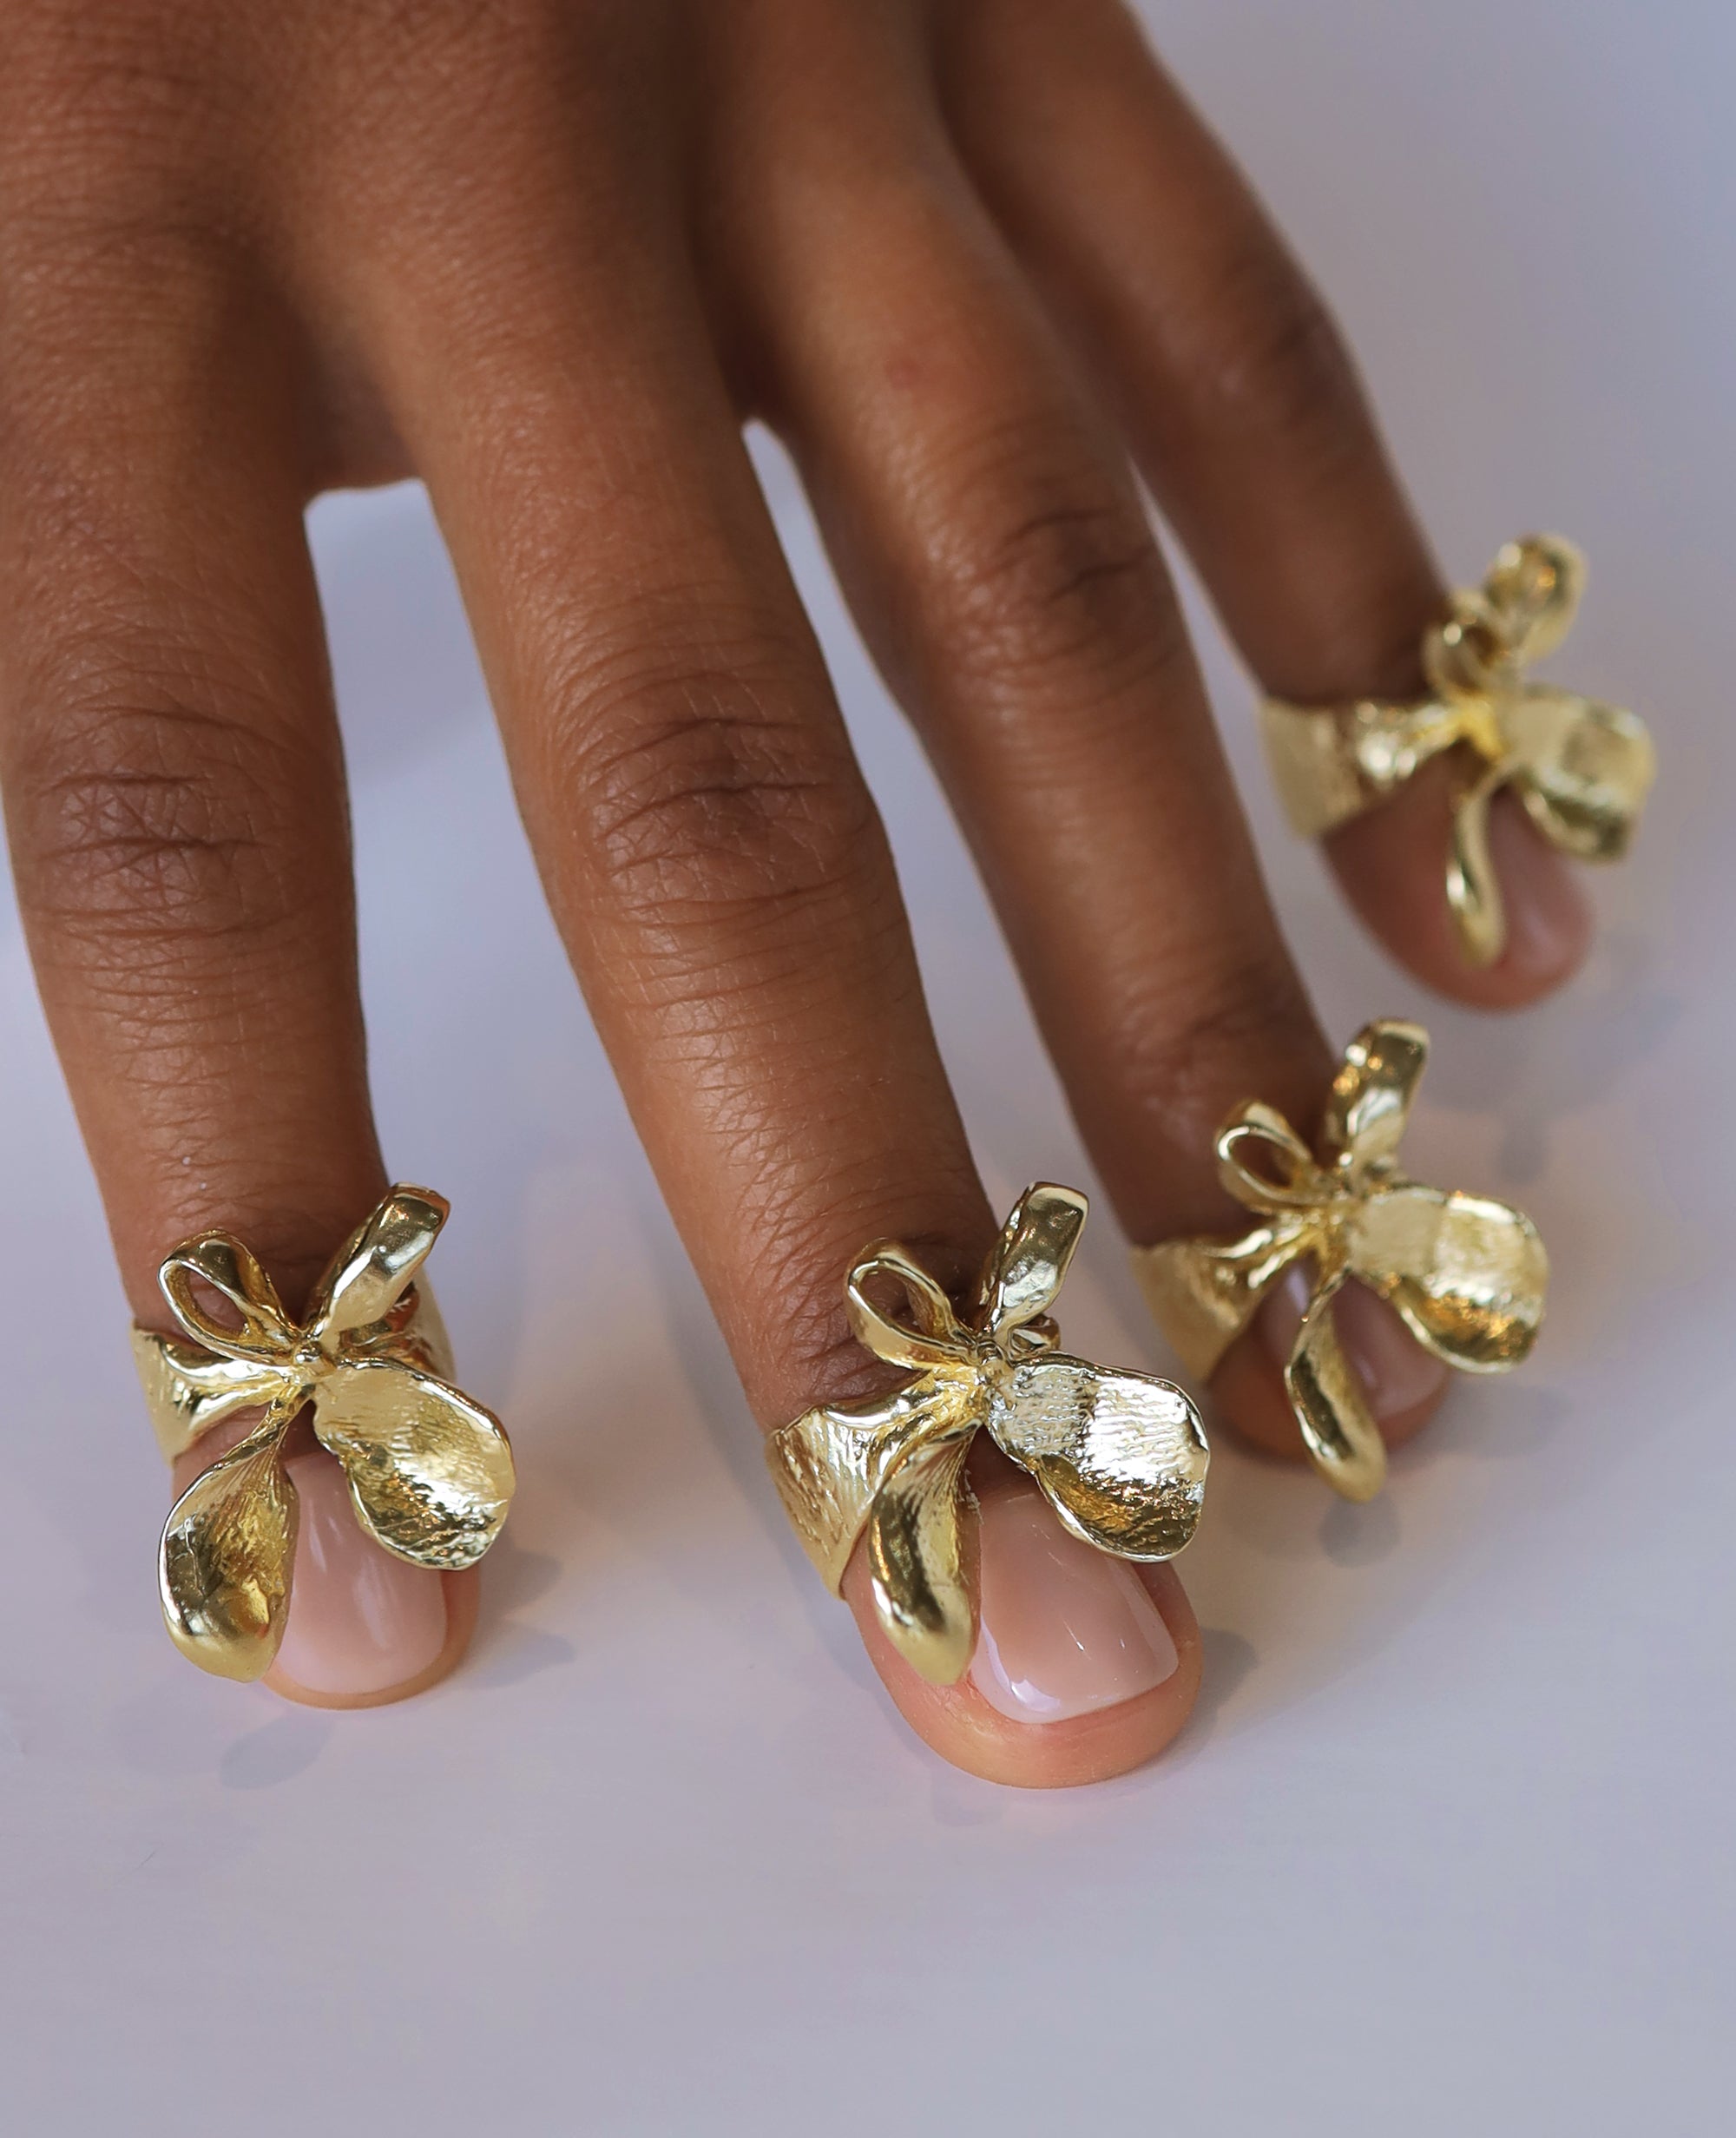 FINGER BOW // golden cuff ring - ORA-C jewelry - handmade jewelry by Montreal based independent designer Caroline Pham